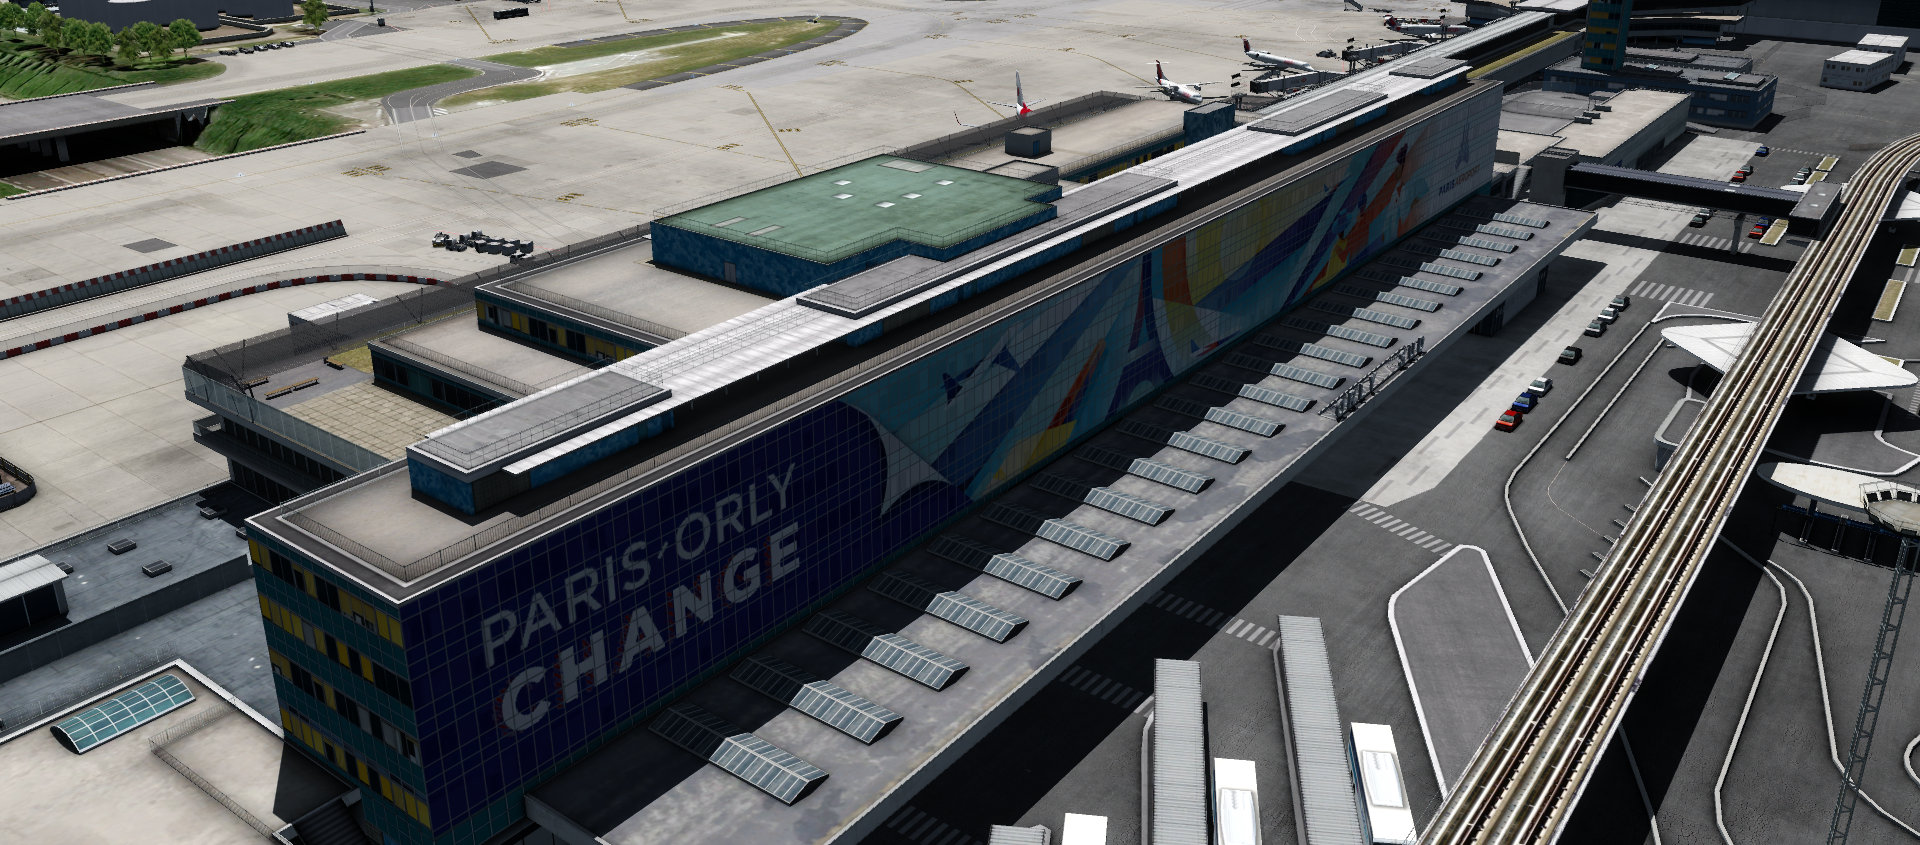 JetStream Designs – Flughafen Paris-Orly Review